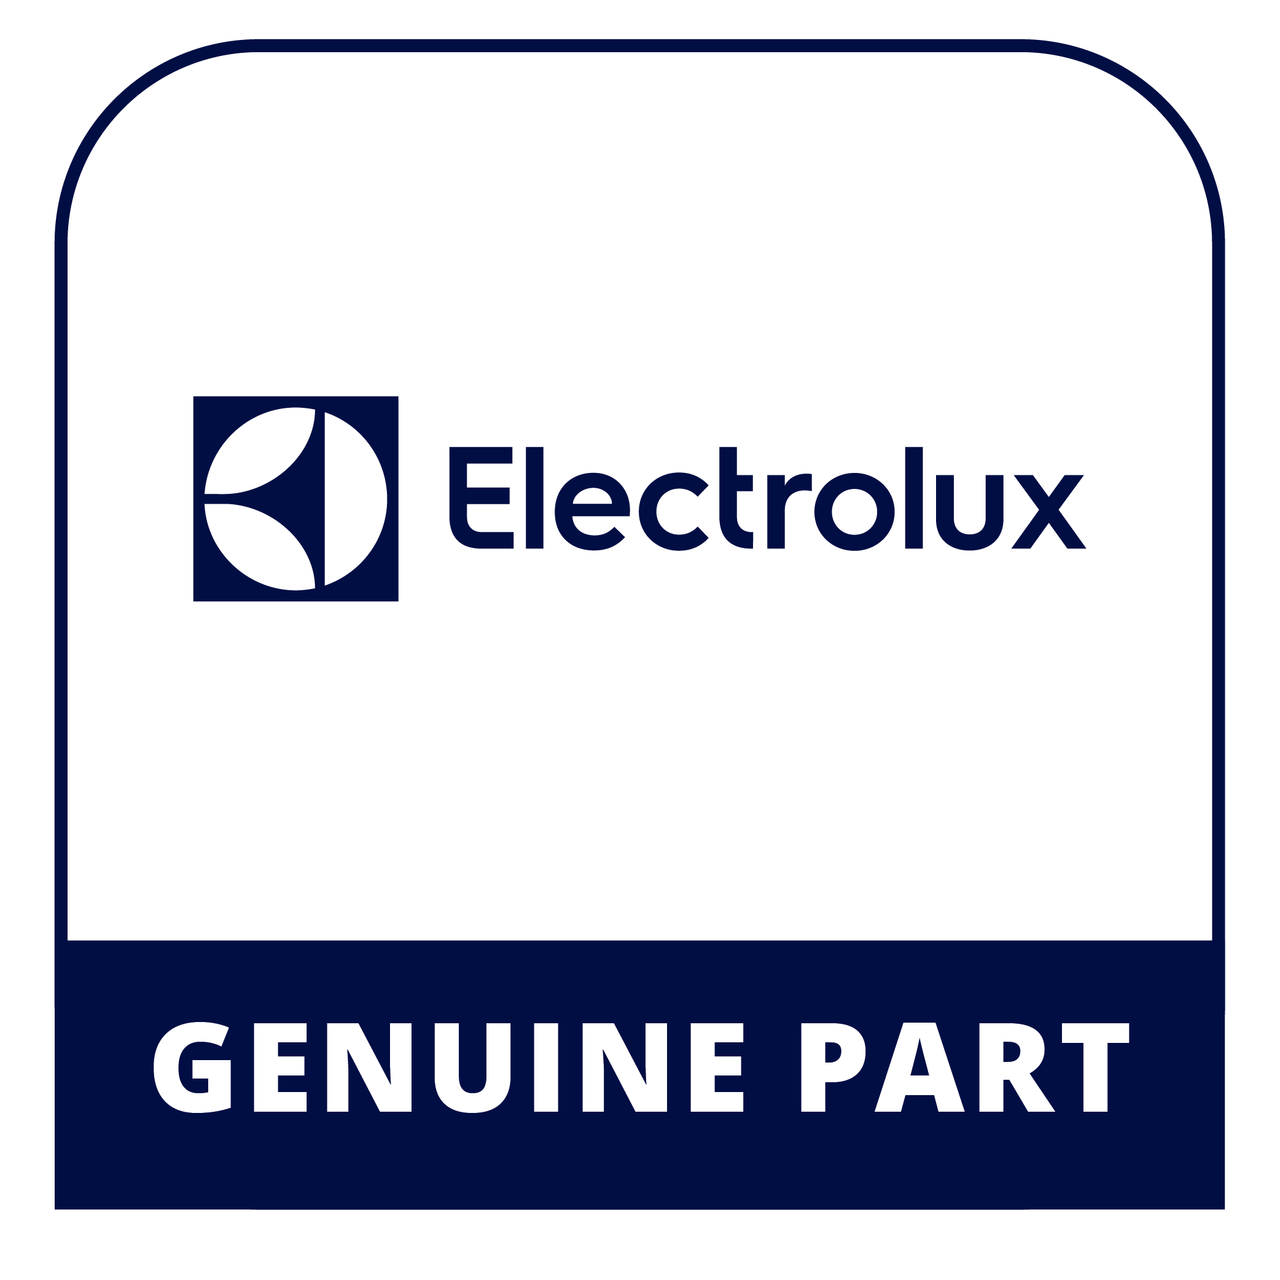 Frigidaire - Electrolux 5304483059 Motor - Genuine Electrolux Part